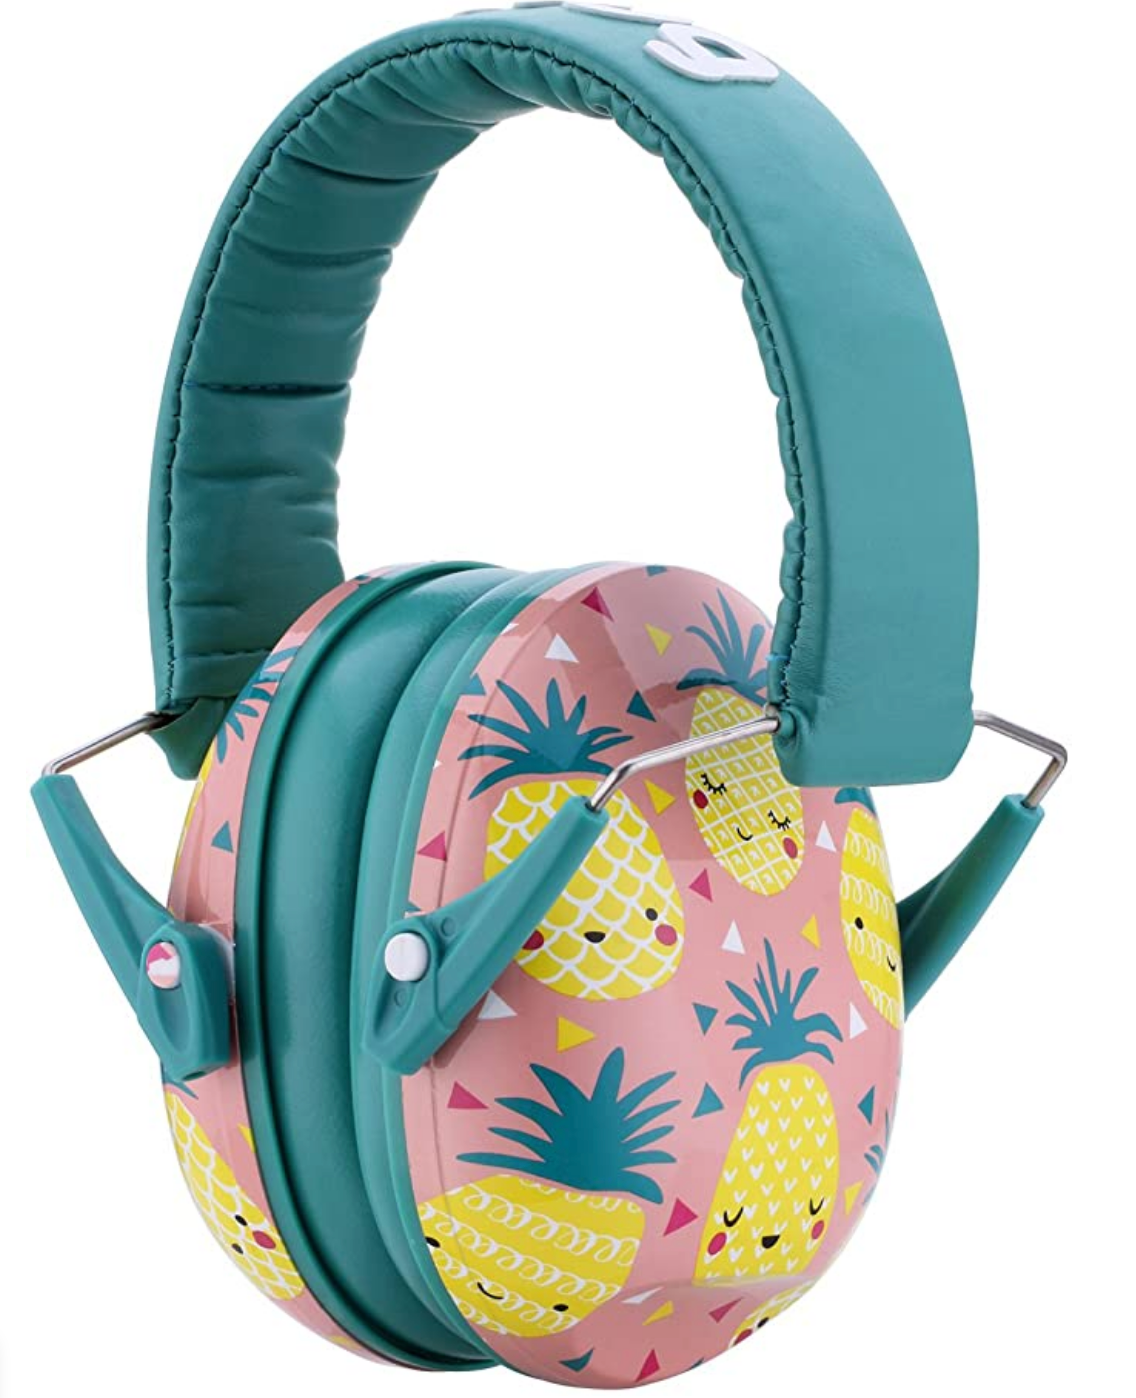 Snug Kids Ear Protection - Noise Cancelling Sound Proof Earmuffs